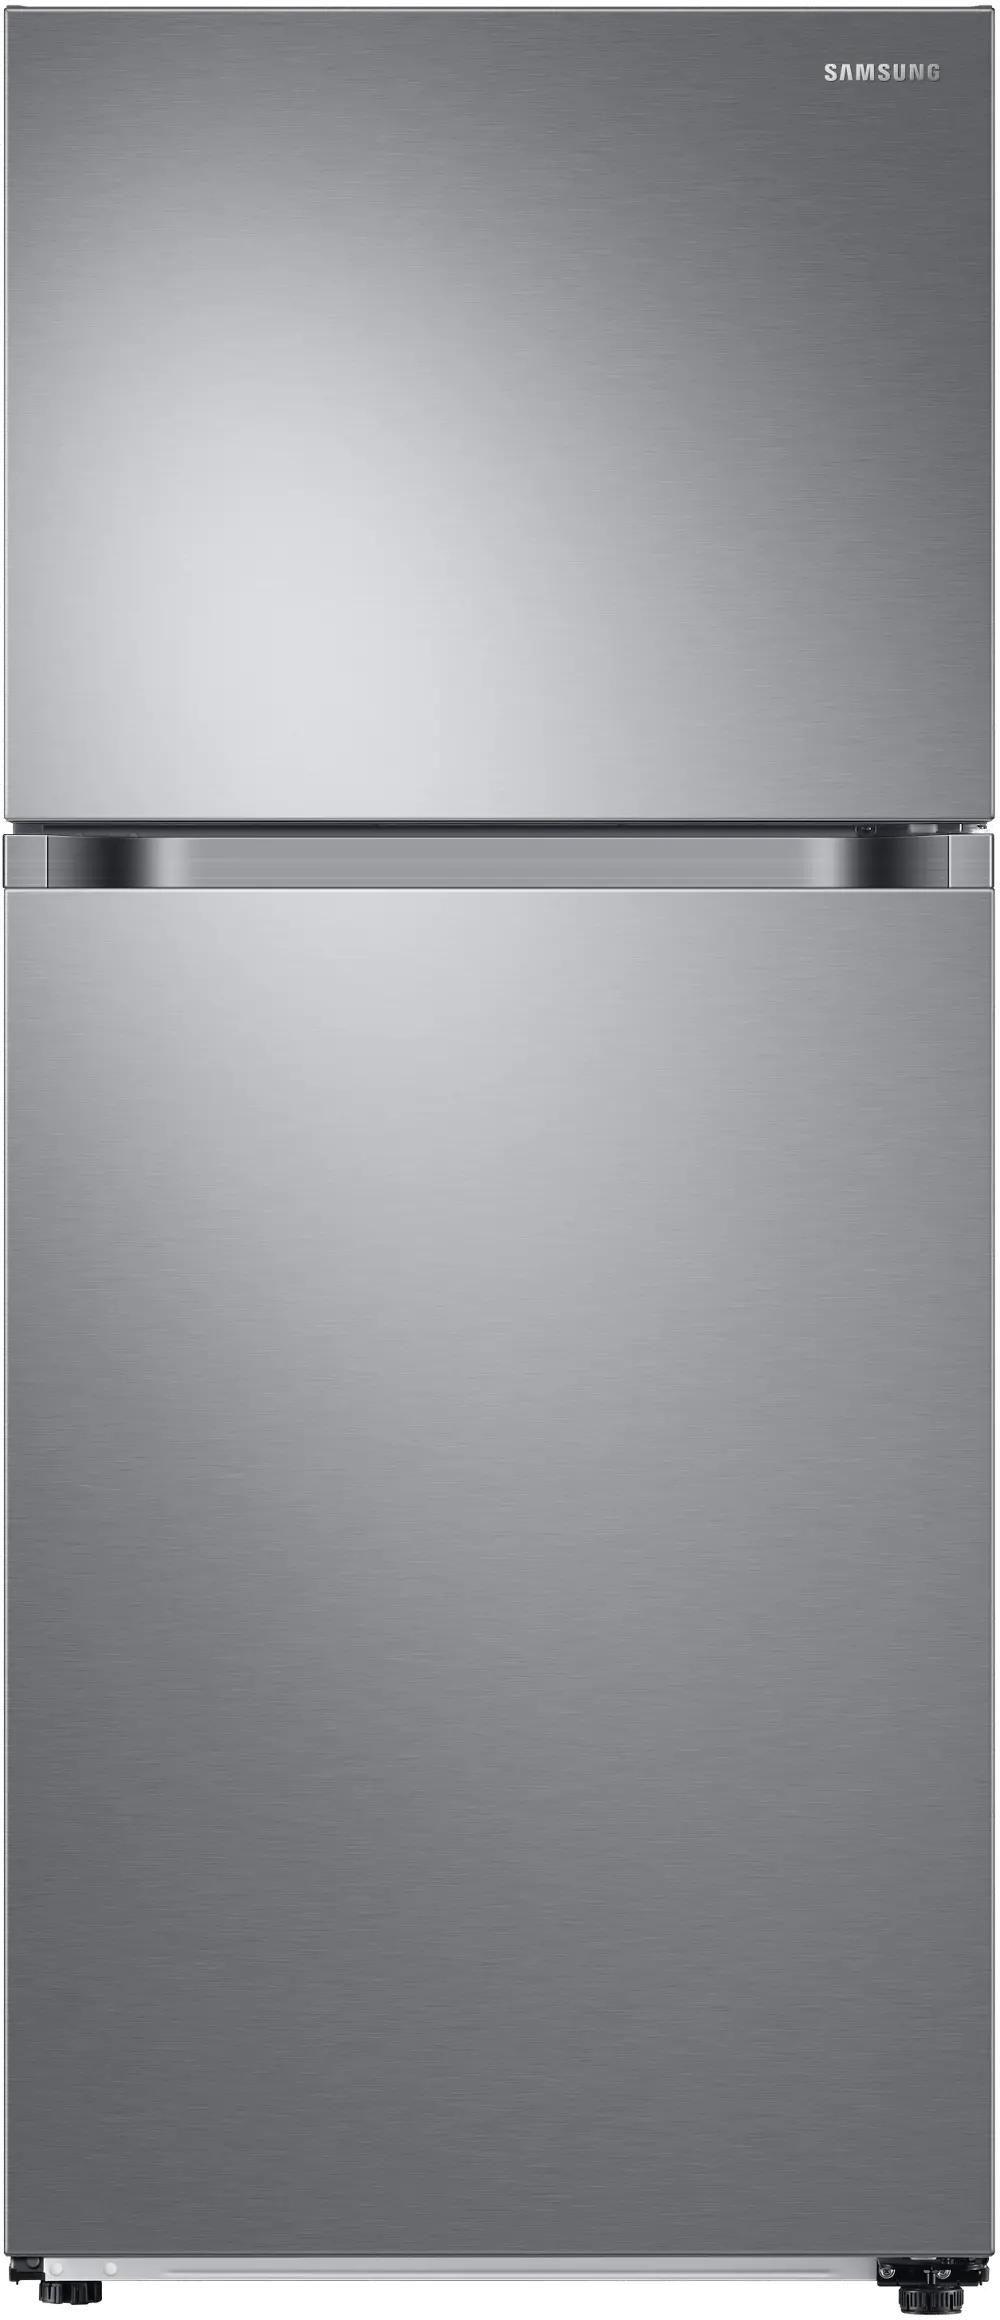 RT18M6215SR Samsung 18 cu ft Top Freezer Refrigerator - 29 W Stainless Steel-1